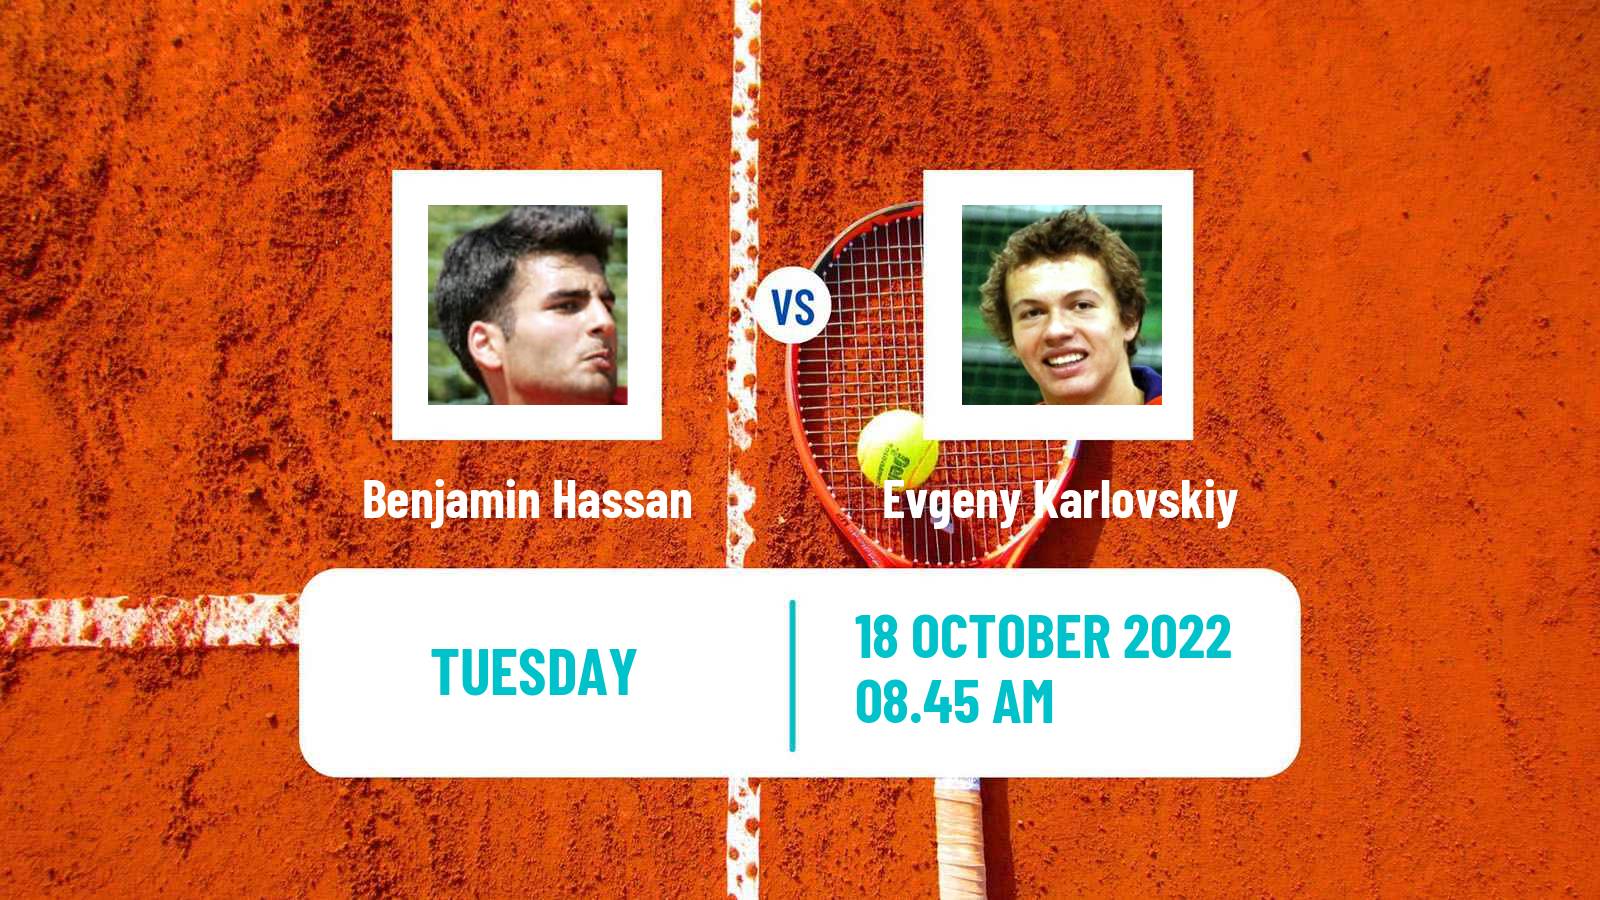 Tennis ATP Challenger Benjamin Hassan - Evgeny Karlovskiy